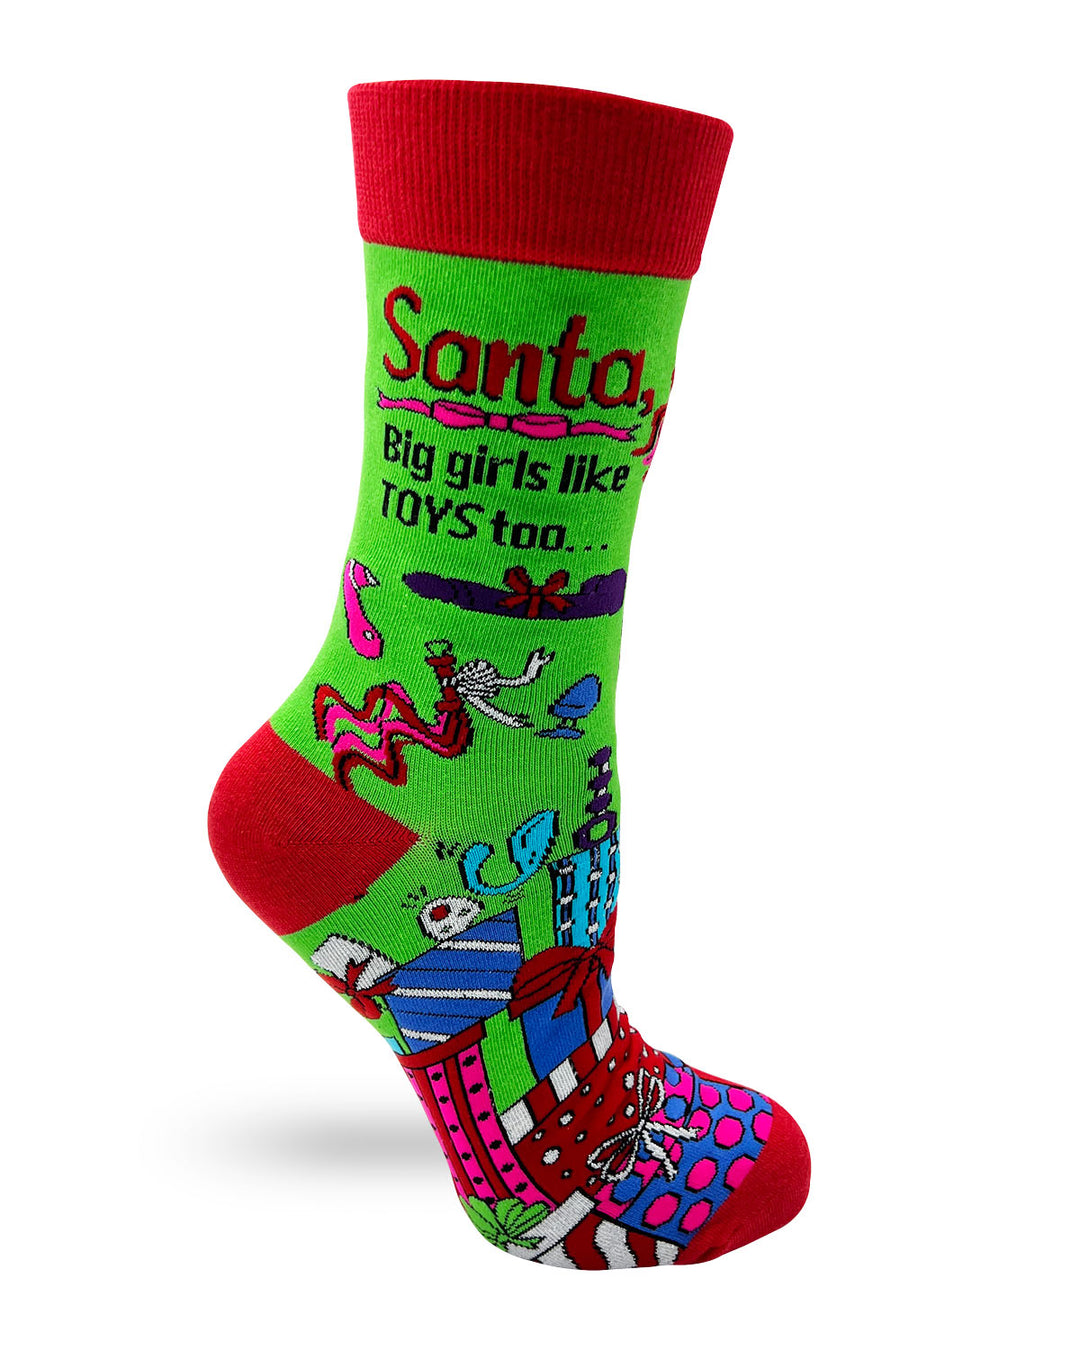 Funny Santa, Big Girls Like Toys Too Funny Ladies' Novelty Christmas Socks